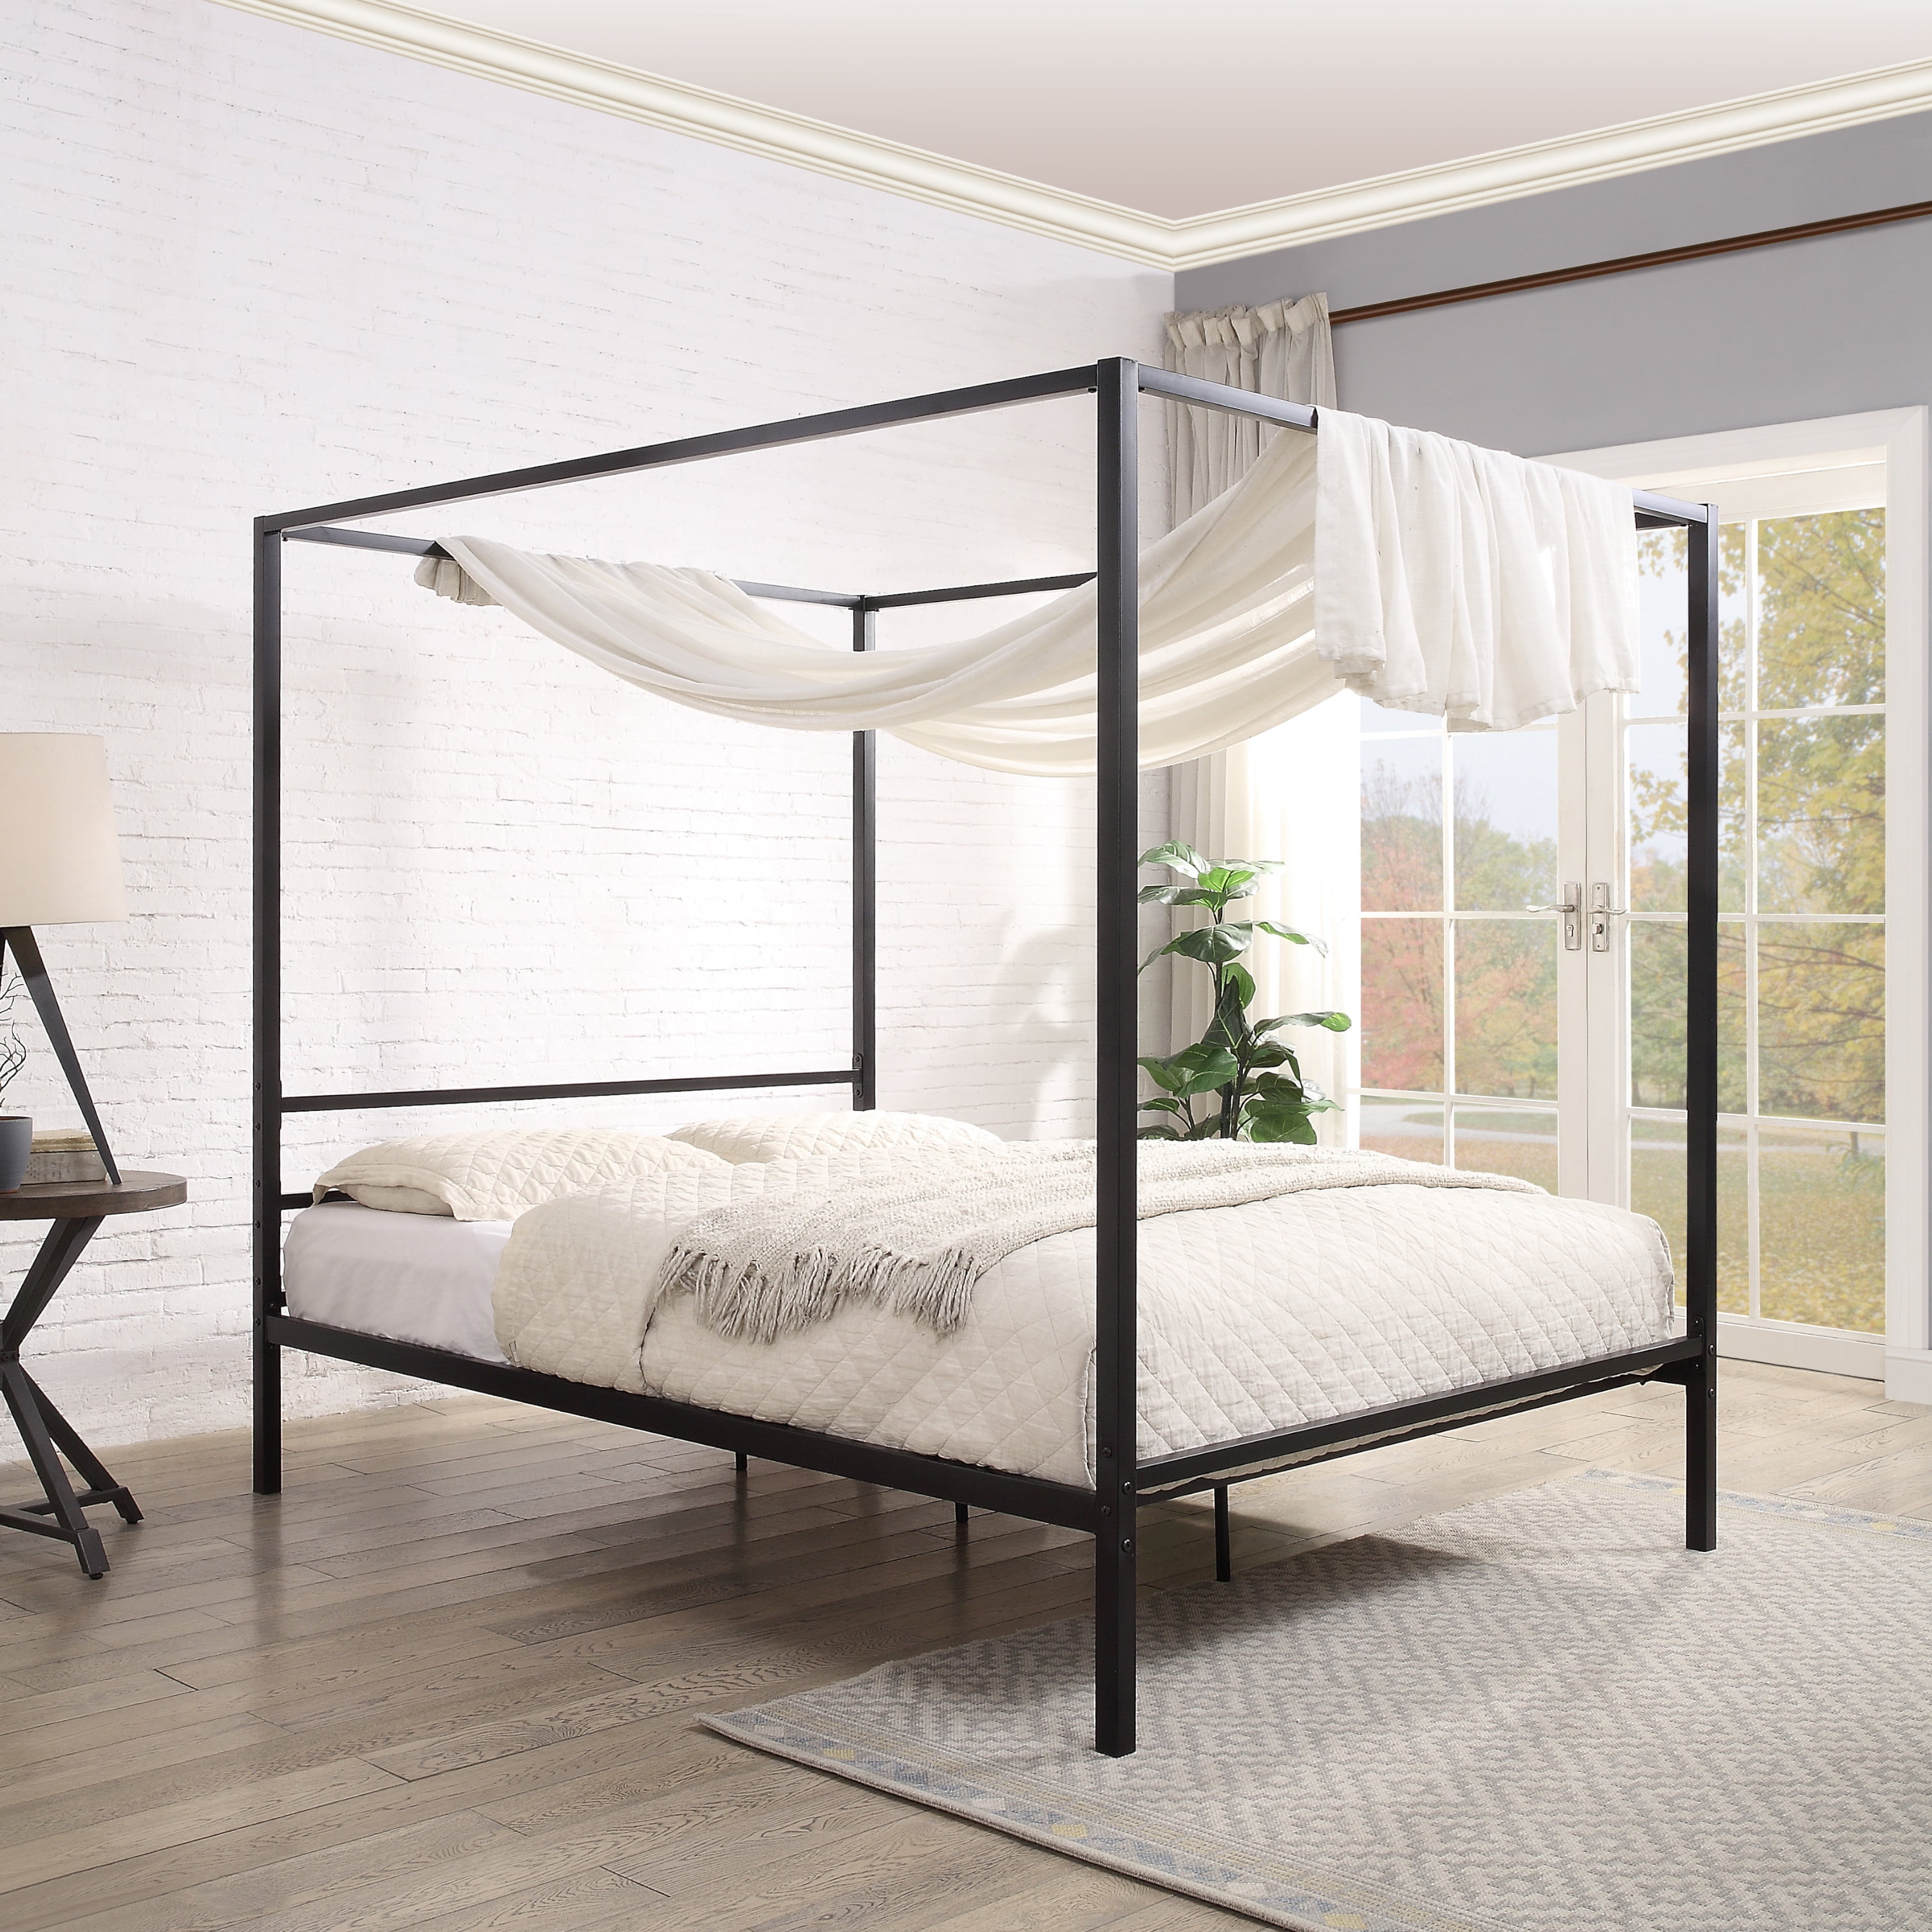 DG Casa Charles 4 Corner Post Canopy Platform Bed Frame Queen Size in Black Metal